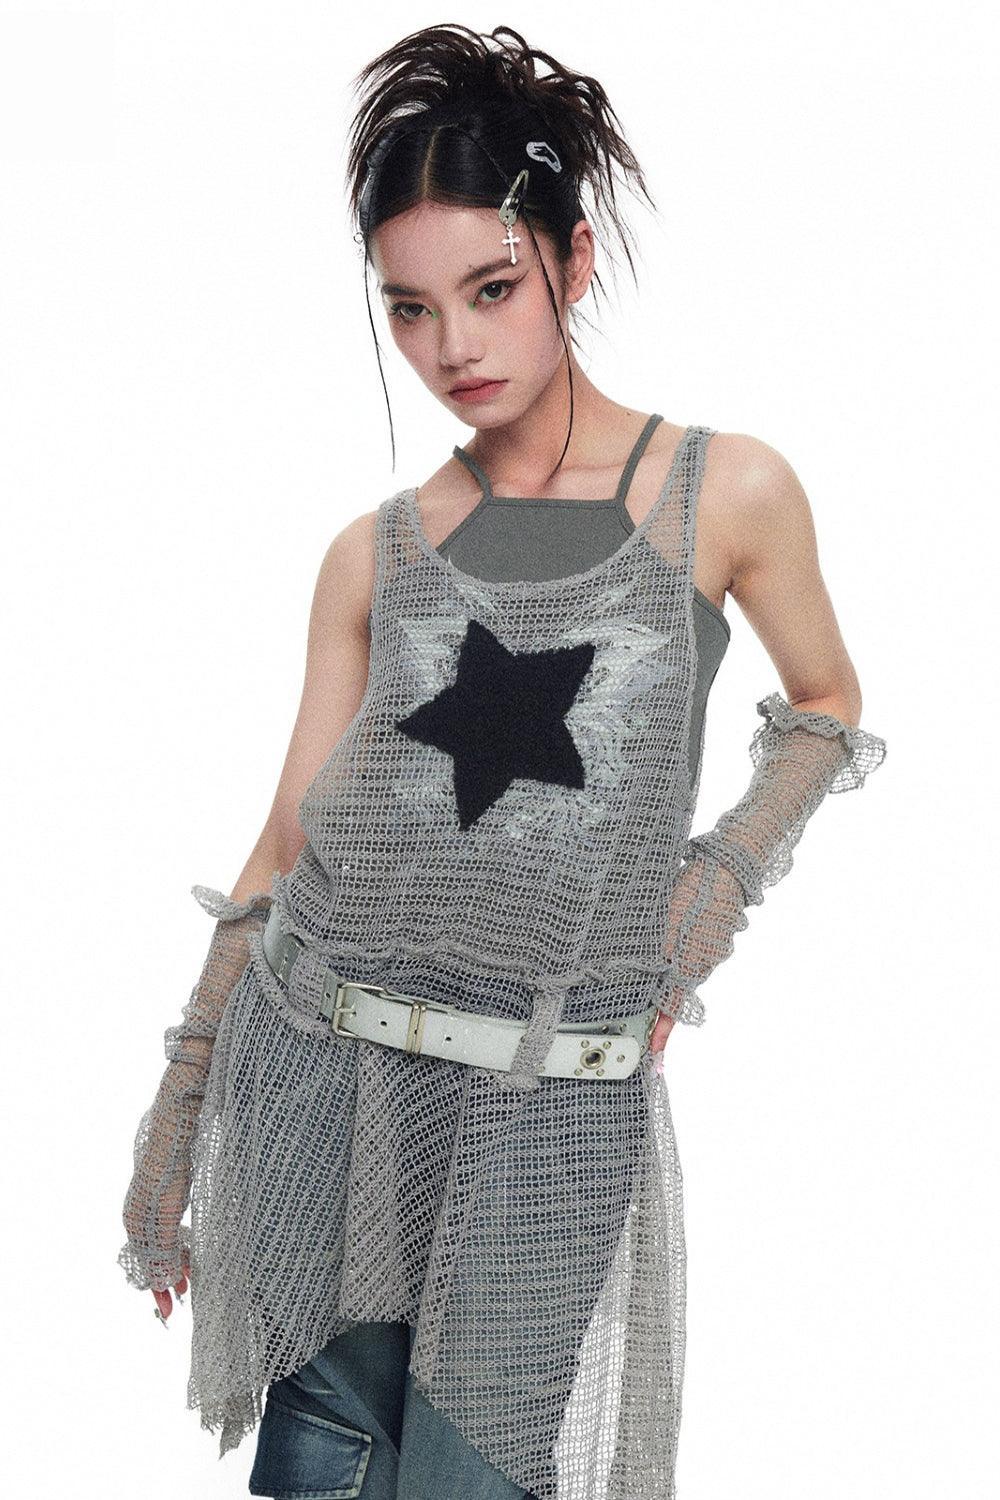 Ruffled Mesh Star Dress with Sleeves - Pixie Rebels